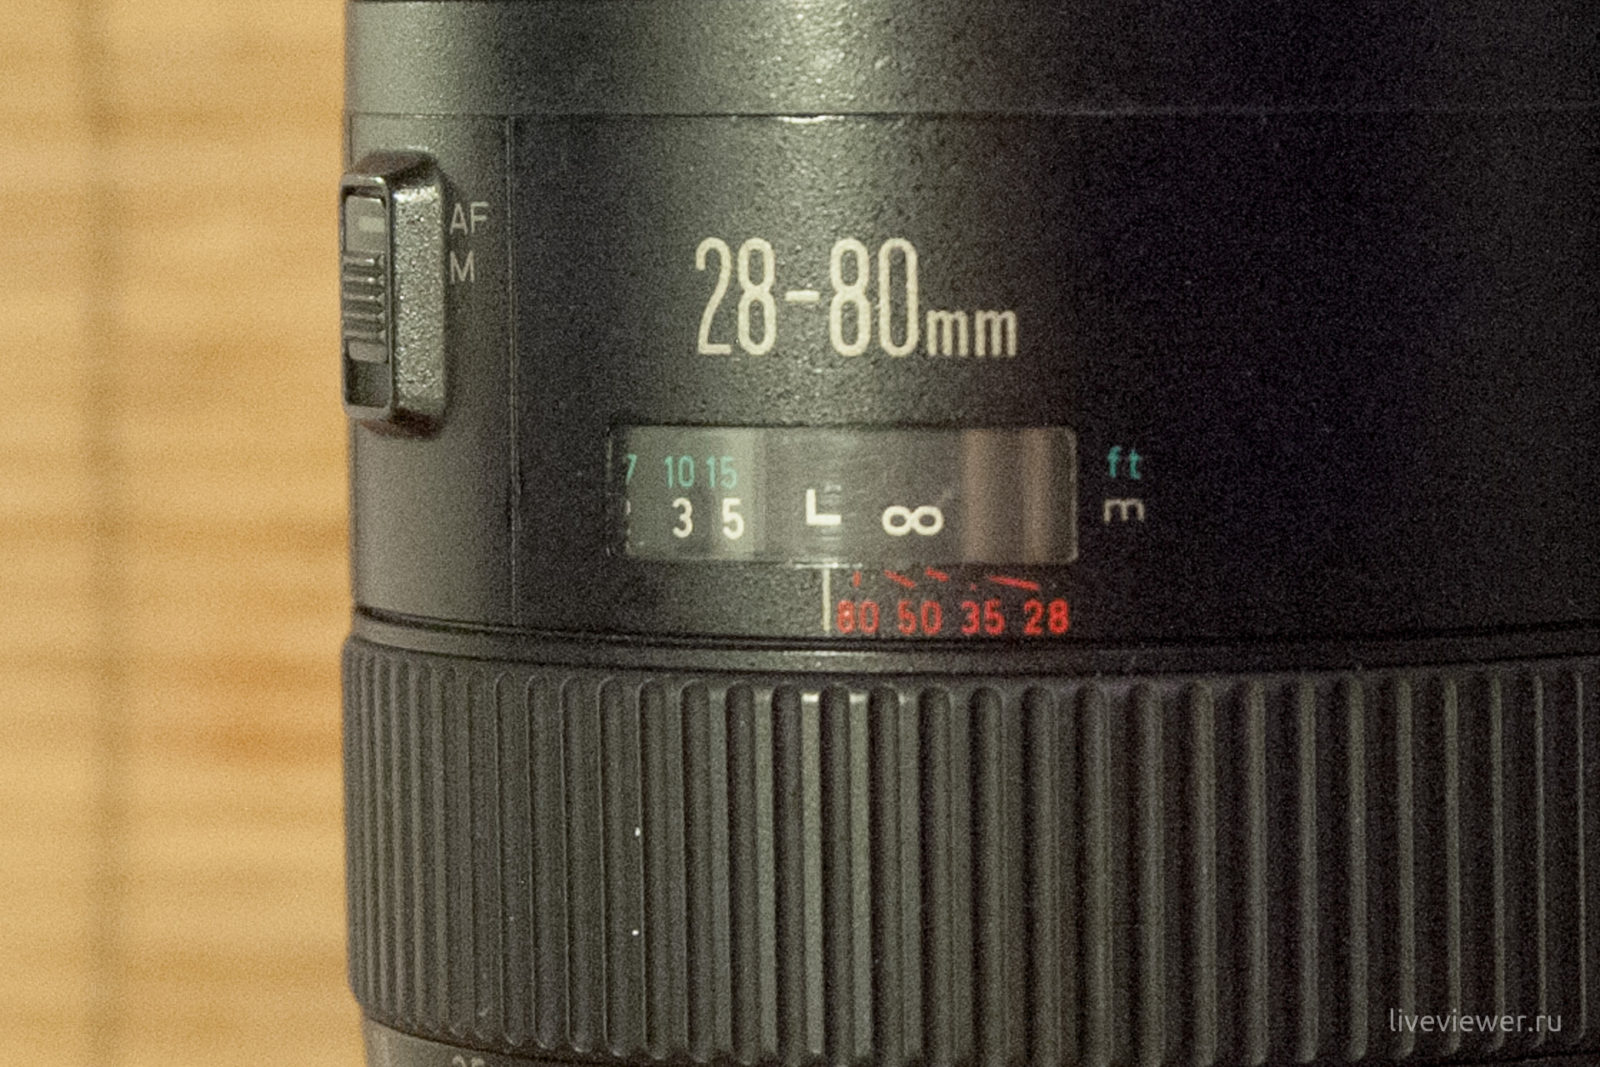 Canon 28-80mm. Focus distance window